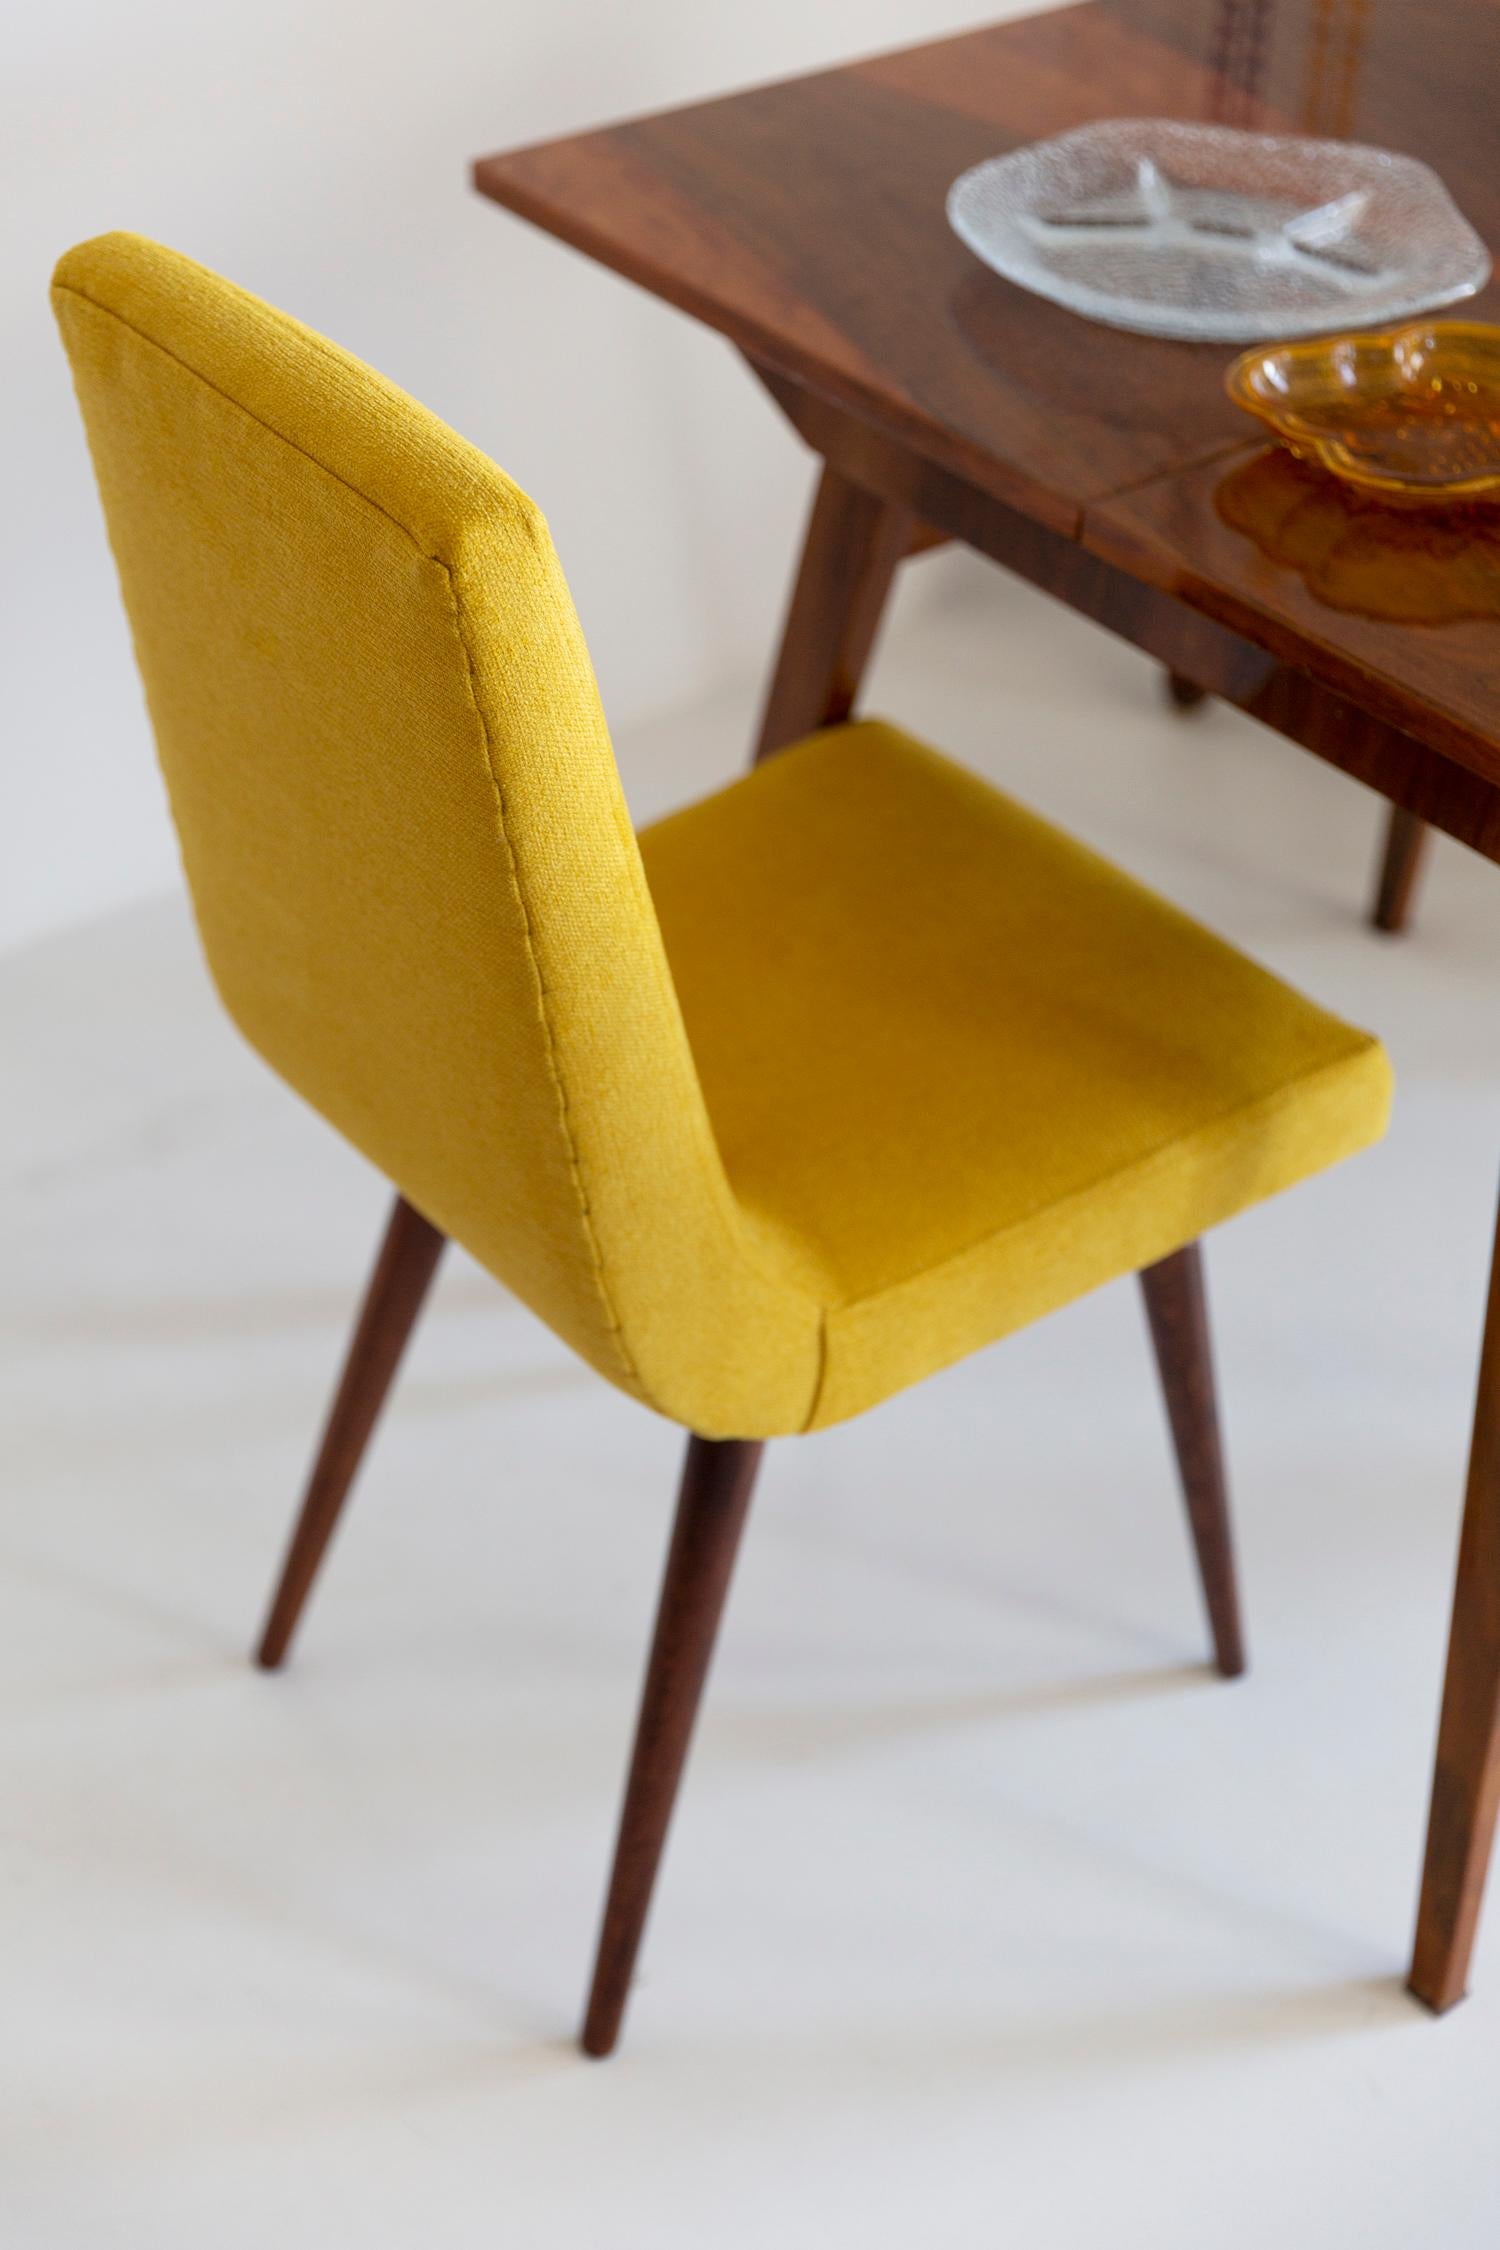 Hand-Crafted Midcentury Mustard Yellow Wool Chair, Rajmund Halas, Europe, 1960s For Sale